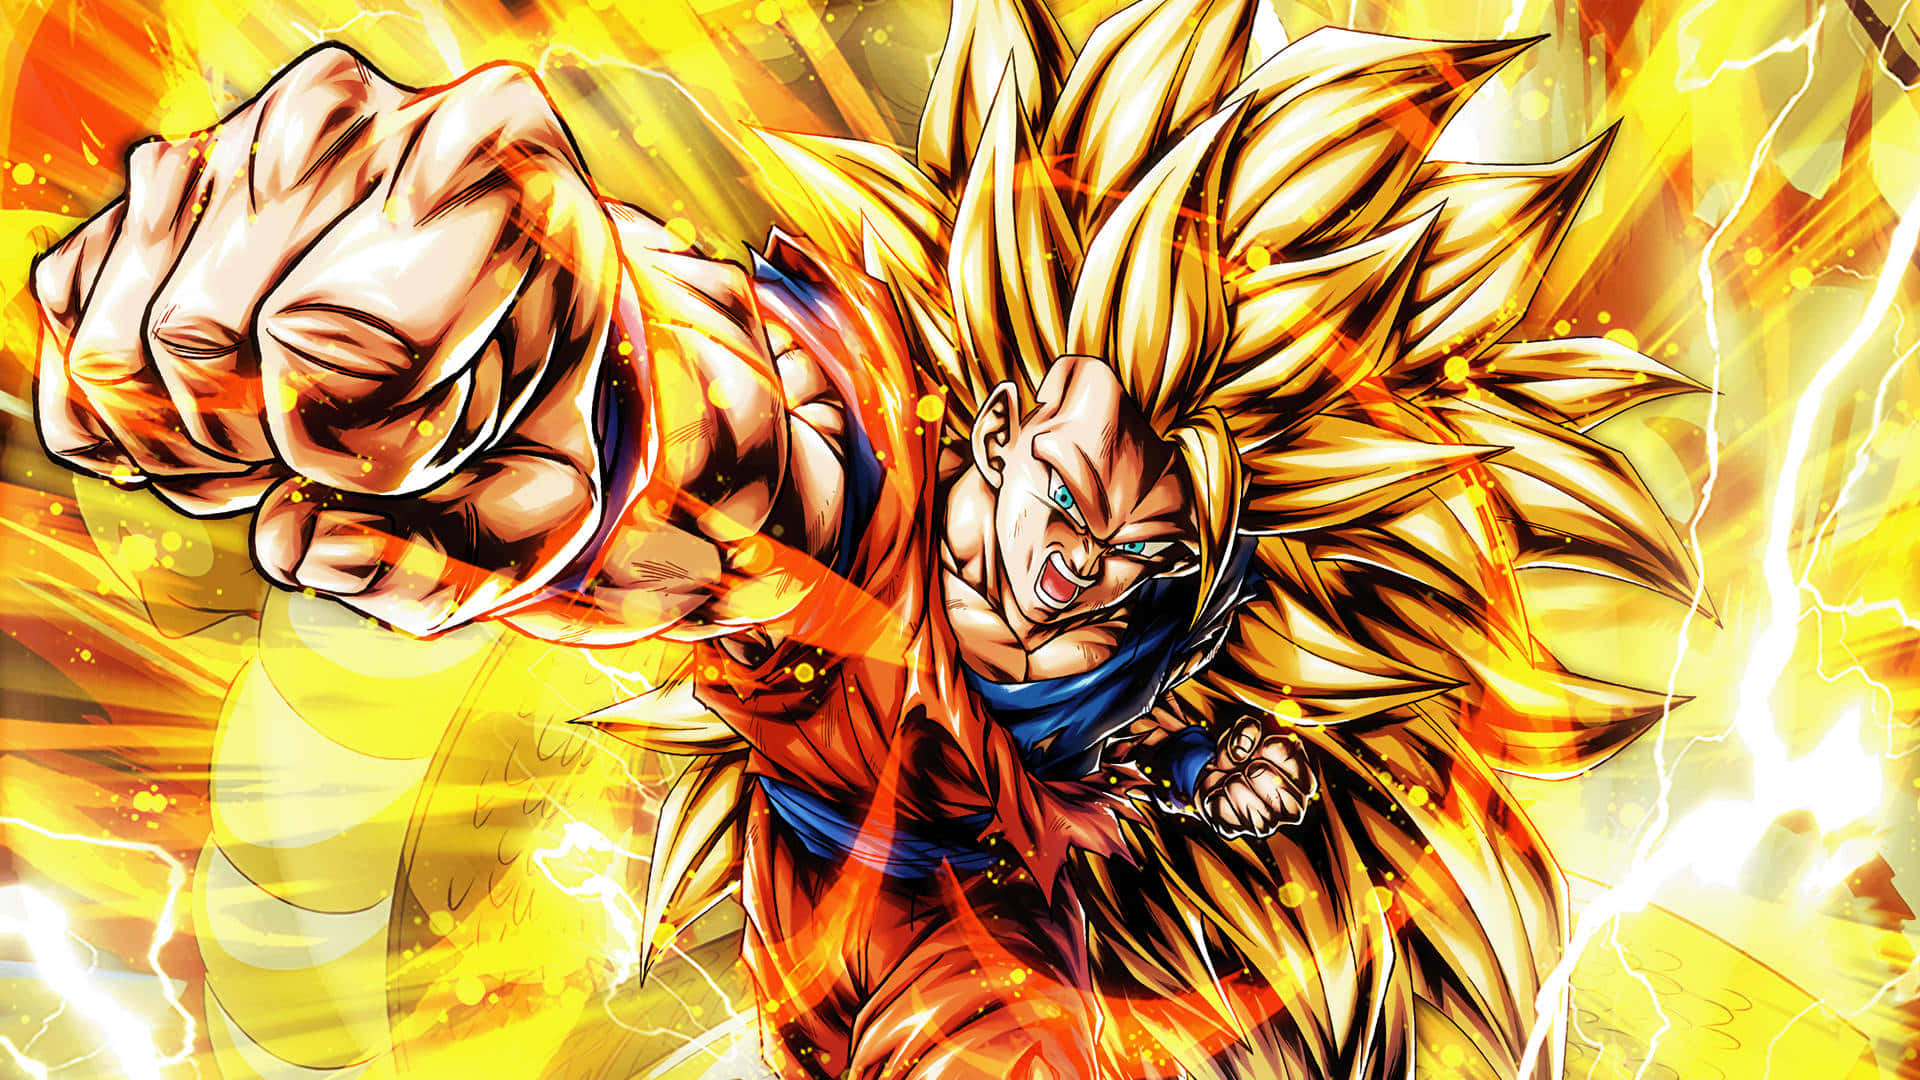 Download Goku Ascends to Super Saiyan 3 Wallpaper, super saiyajin 3 